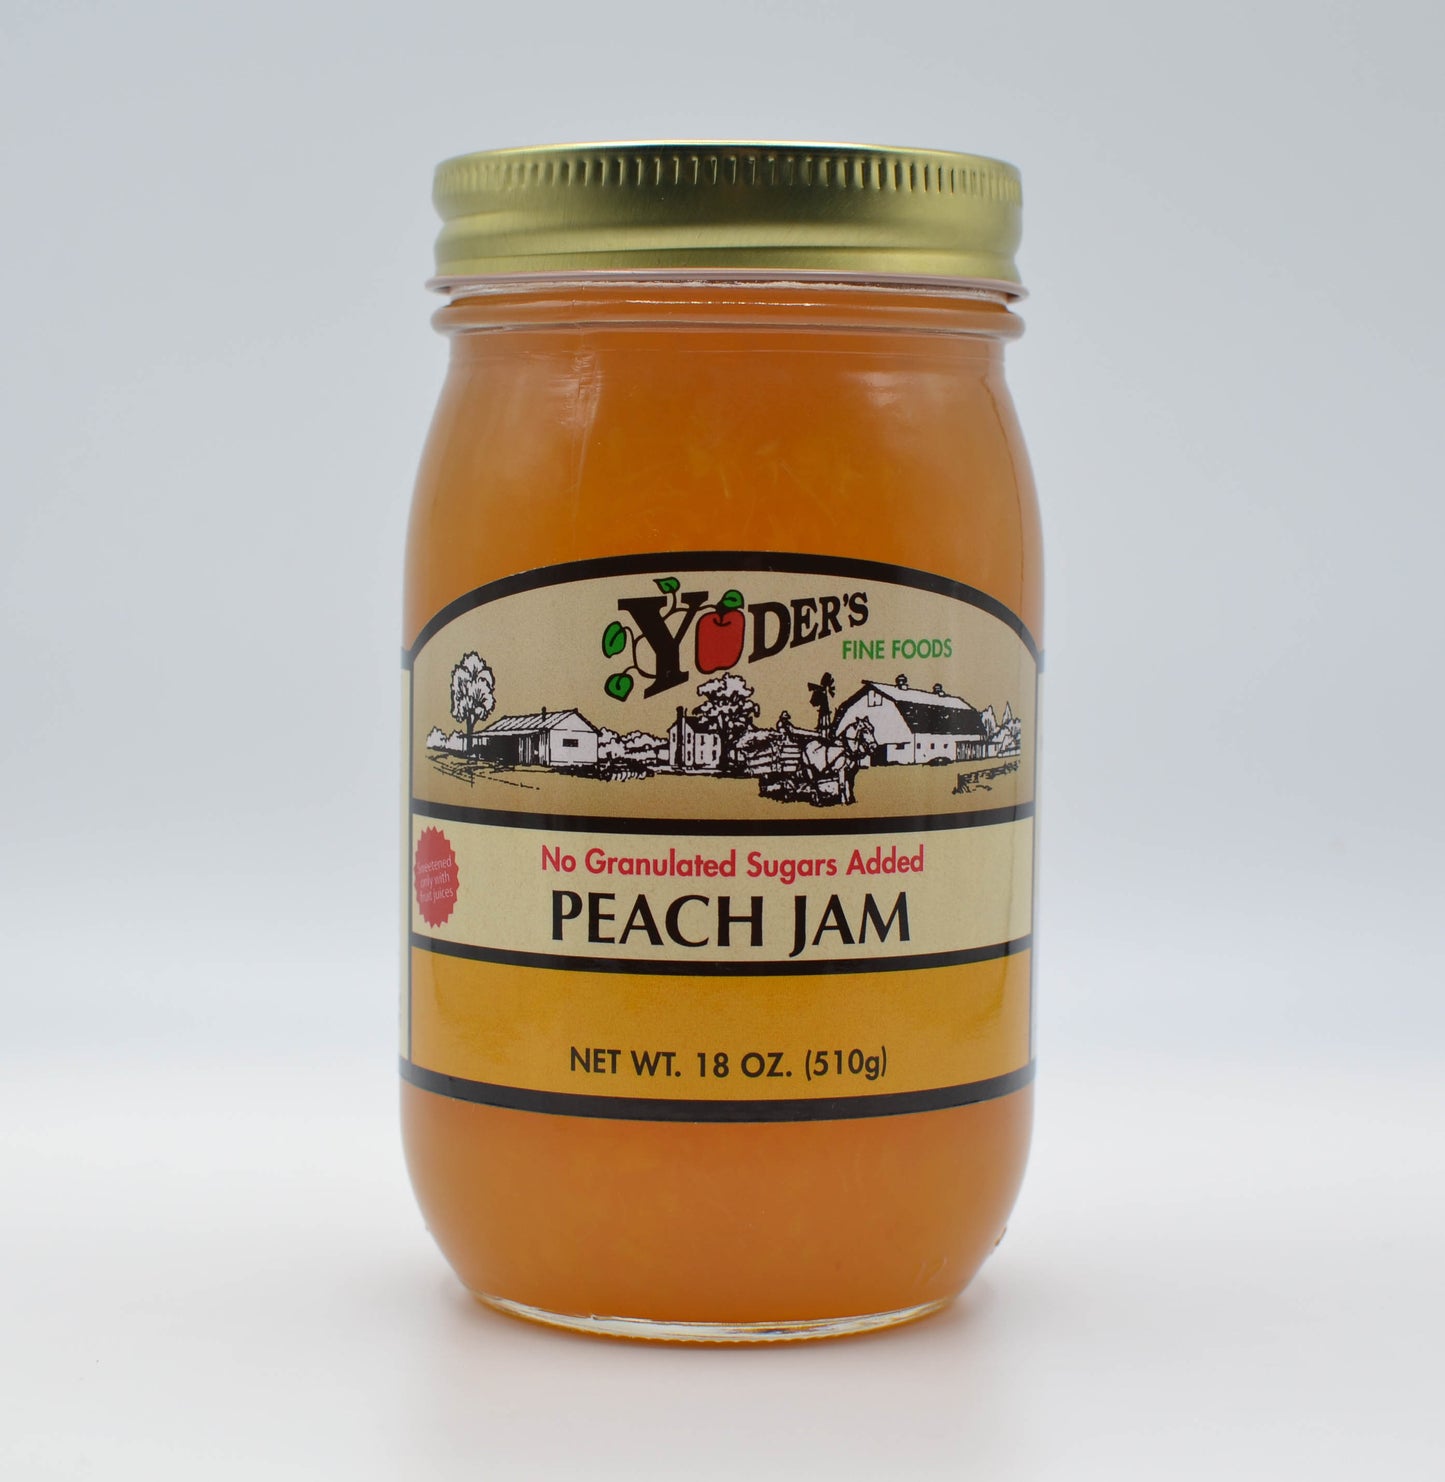 Sugarless Peach Jam